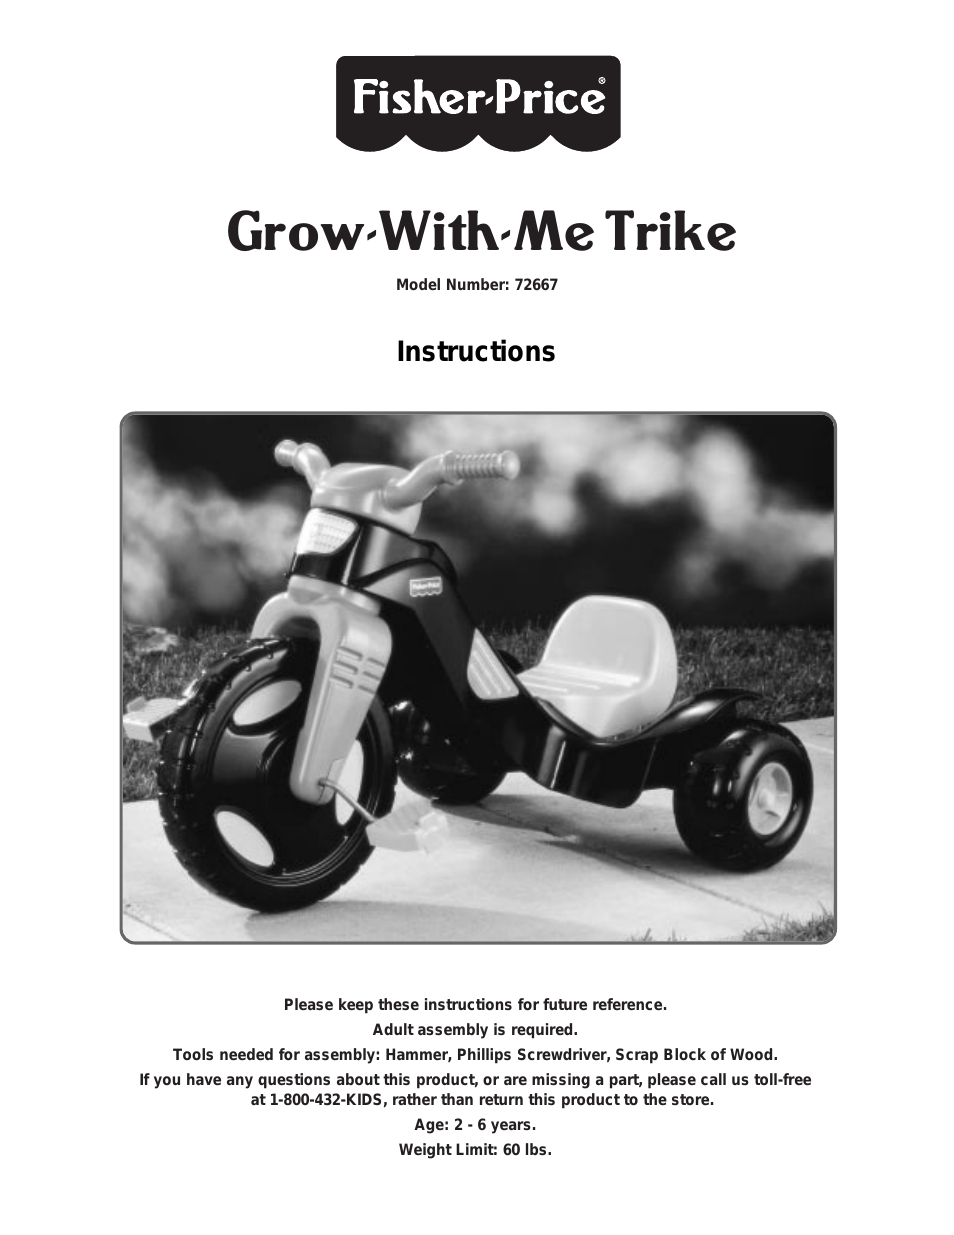 GROW-WITH-ME TRIKE 72667